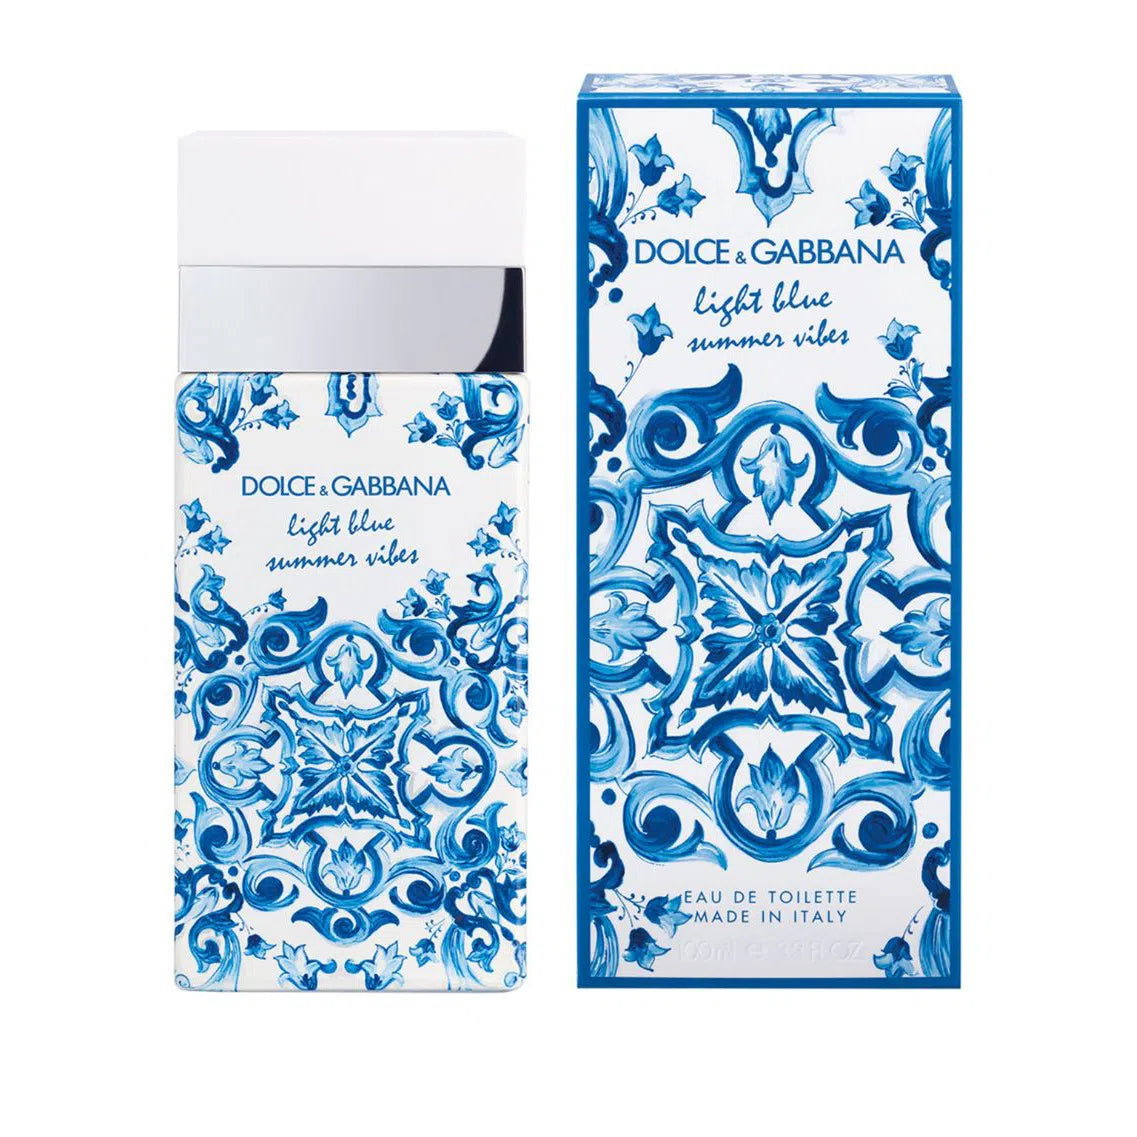 Perfume Dolce & Gabbana Light Blue Summer Vibes EDT (W) / 100 ml - 8057971183500- 1 - Prive Perfumes Honduras